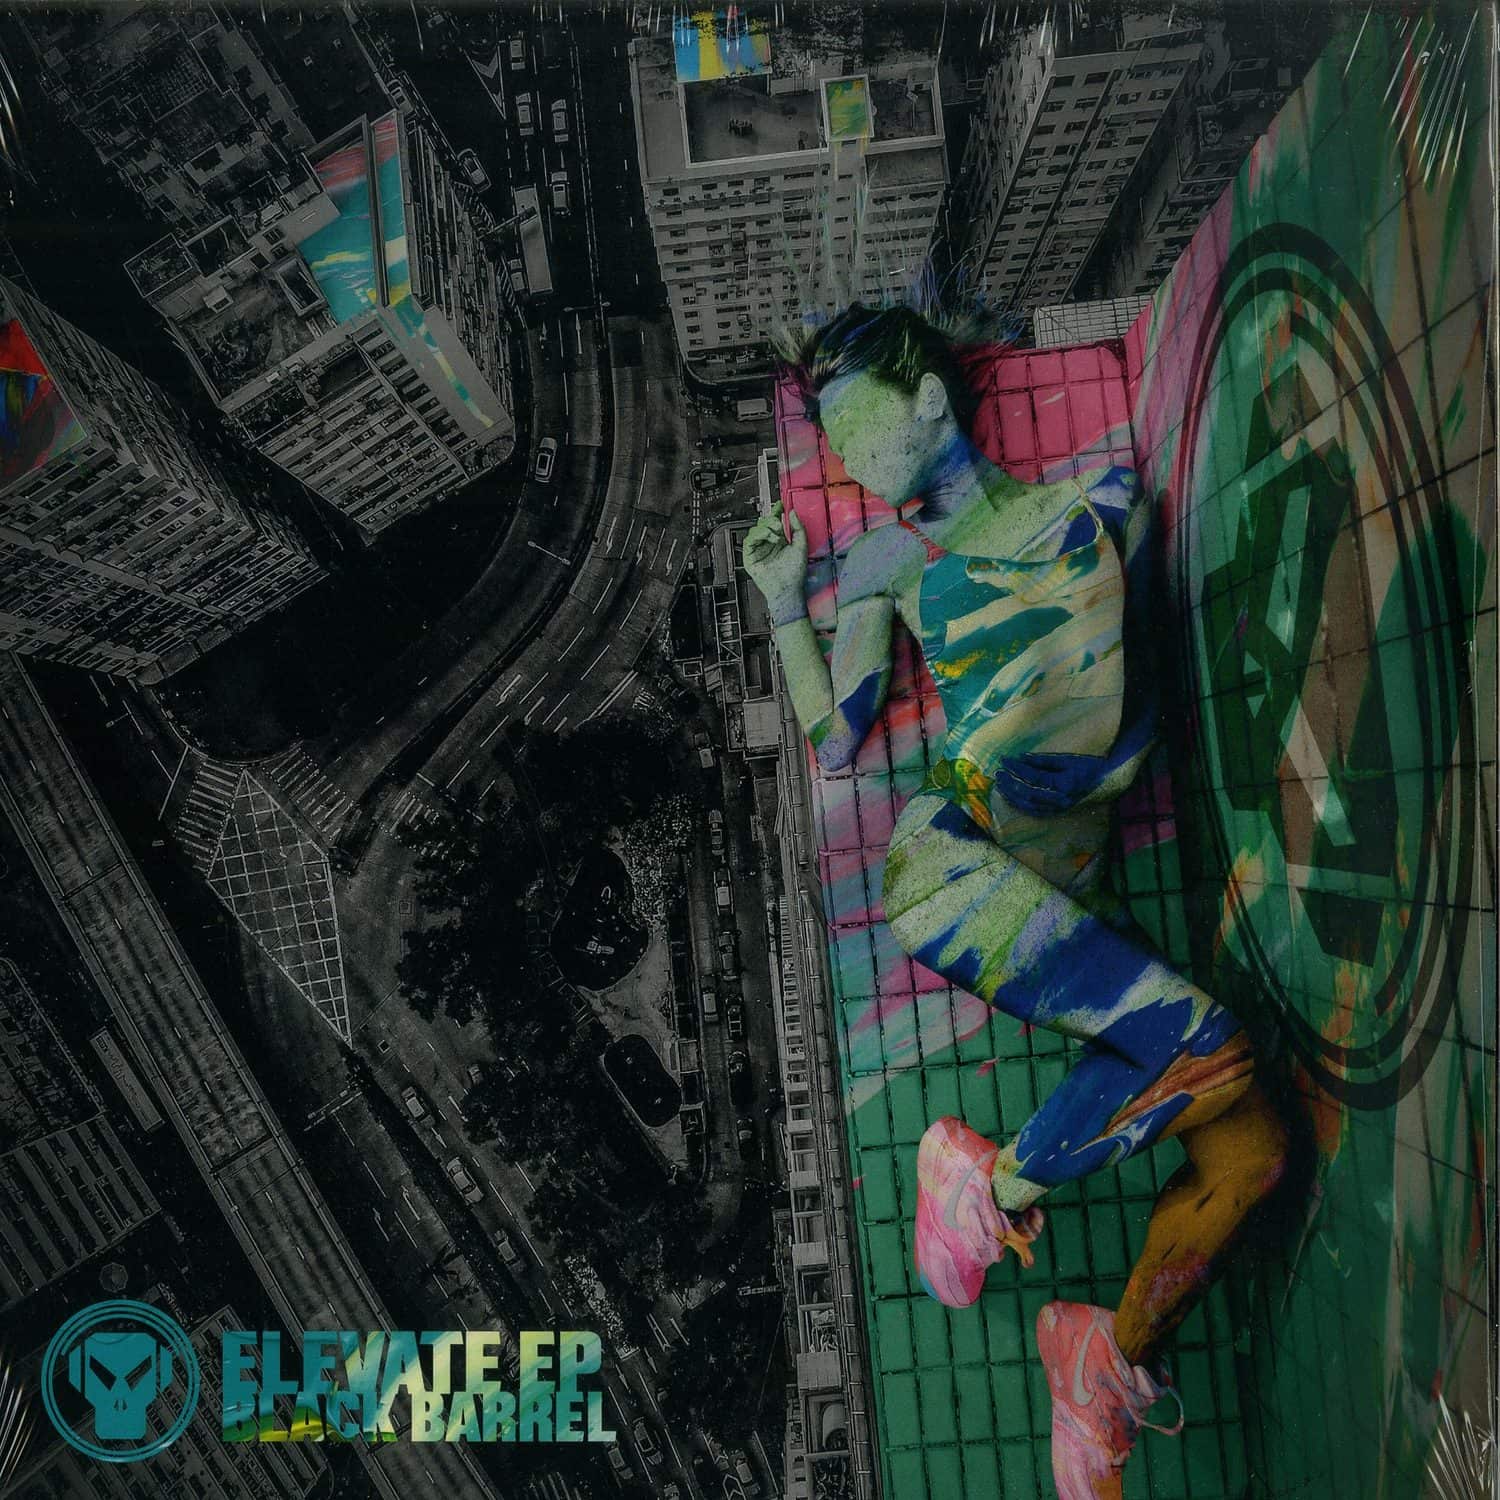 Black Barrel - ELEVATE EP